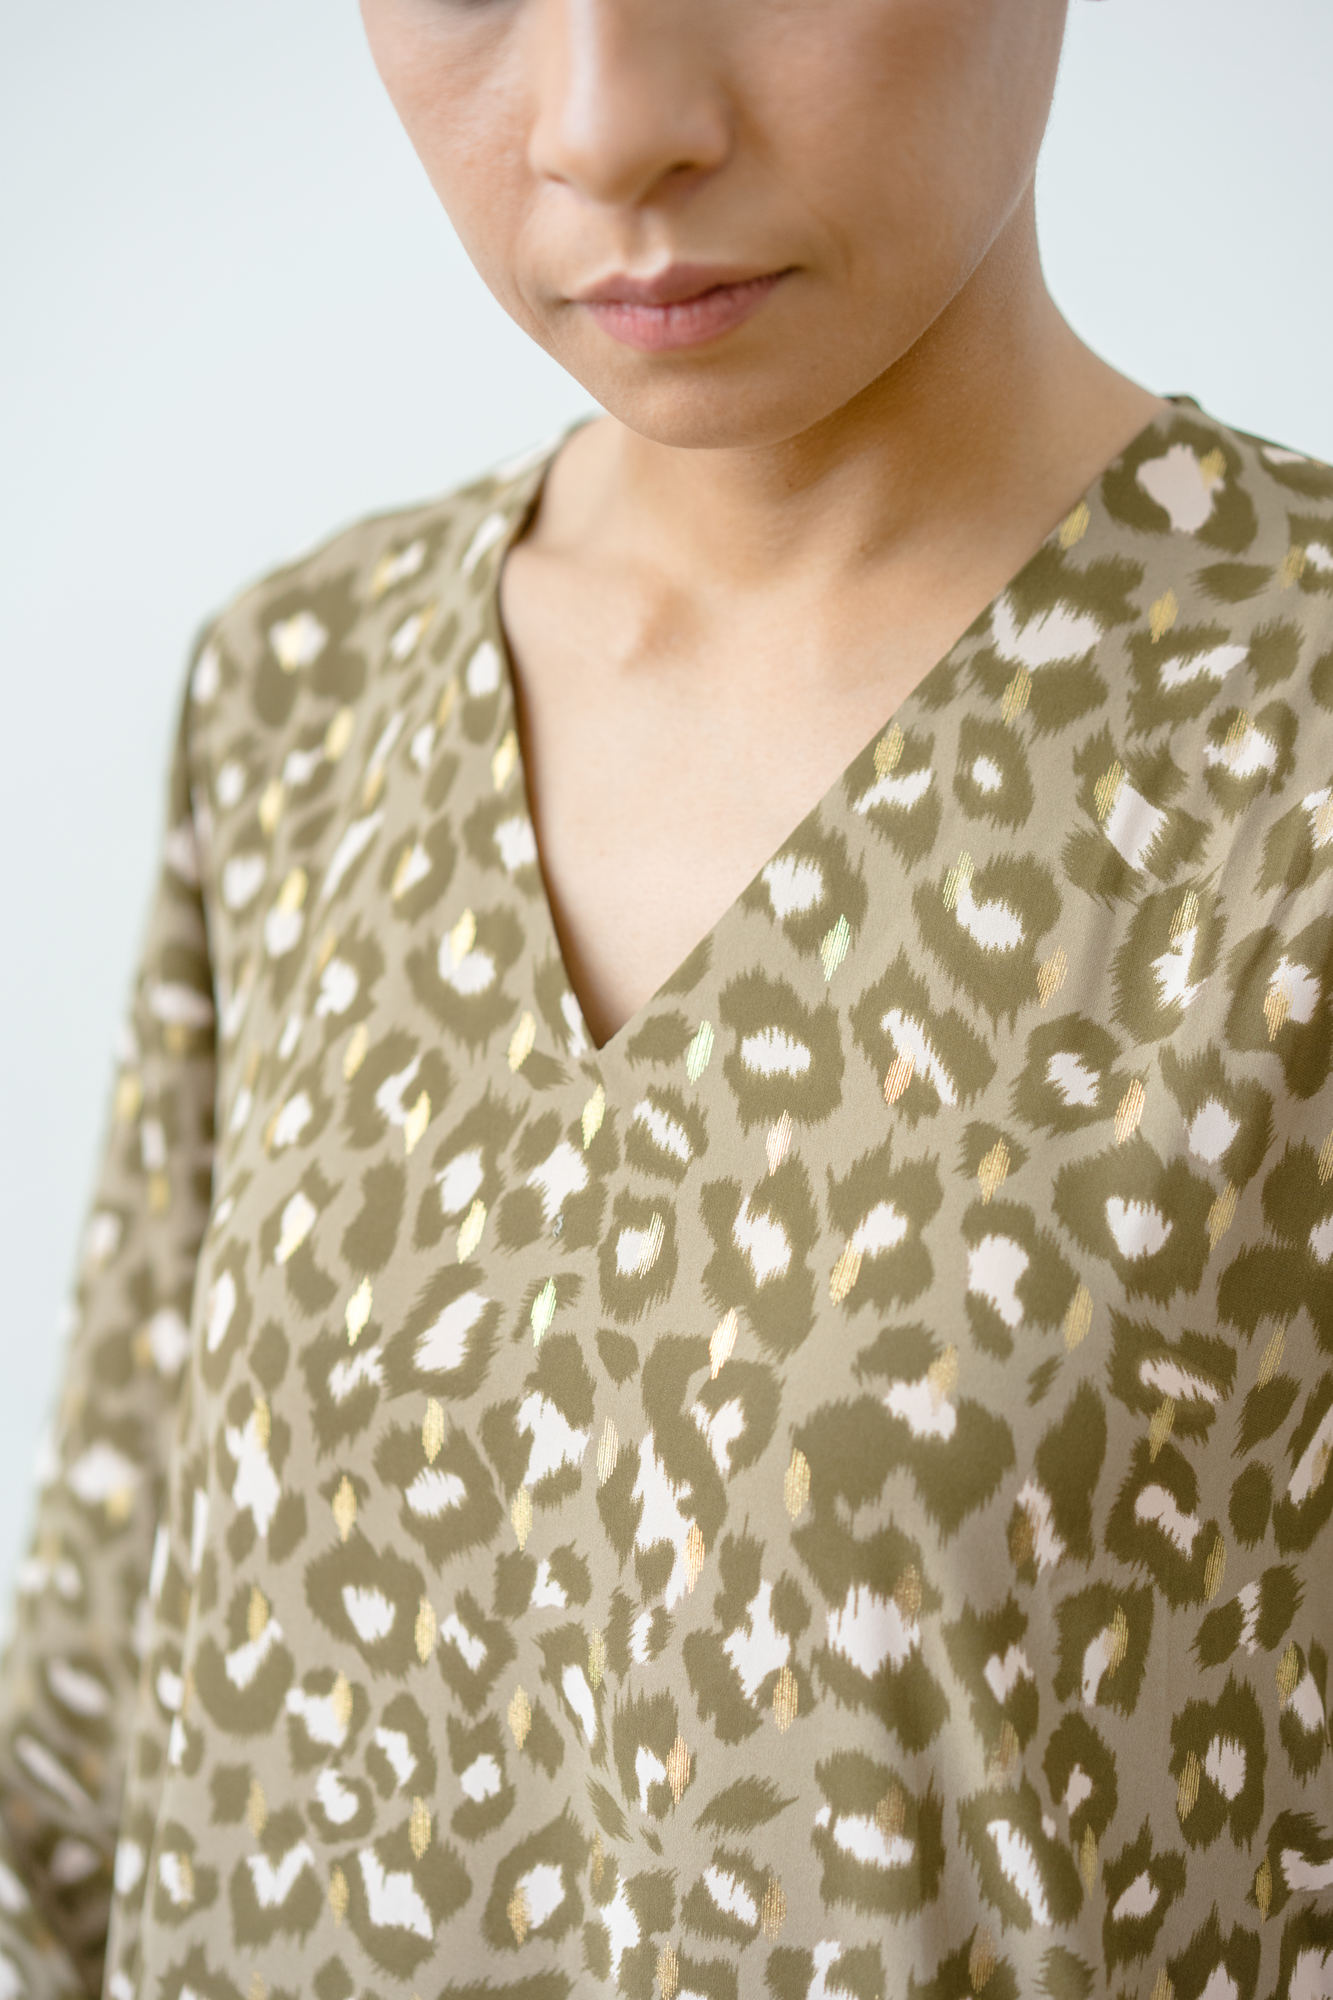 Kitsu Printed Dress in Brown Leopard